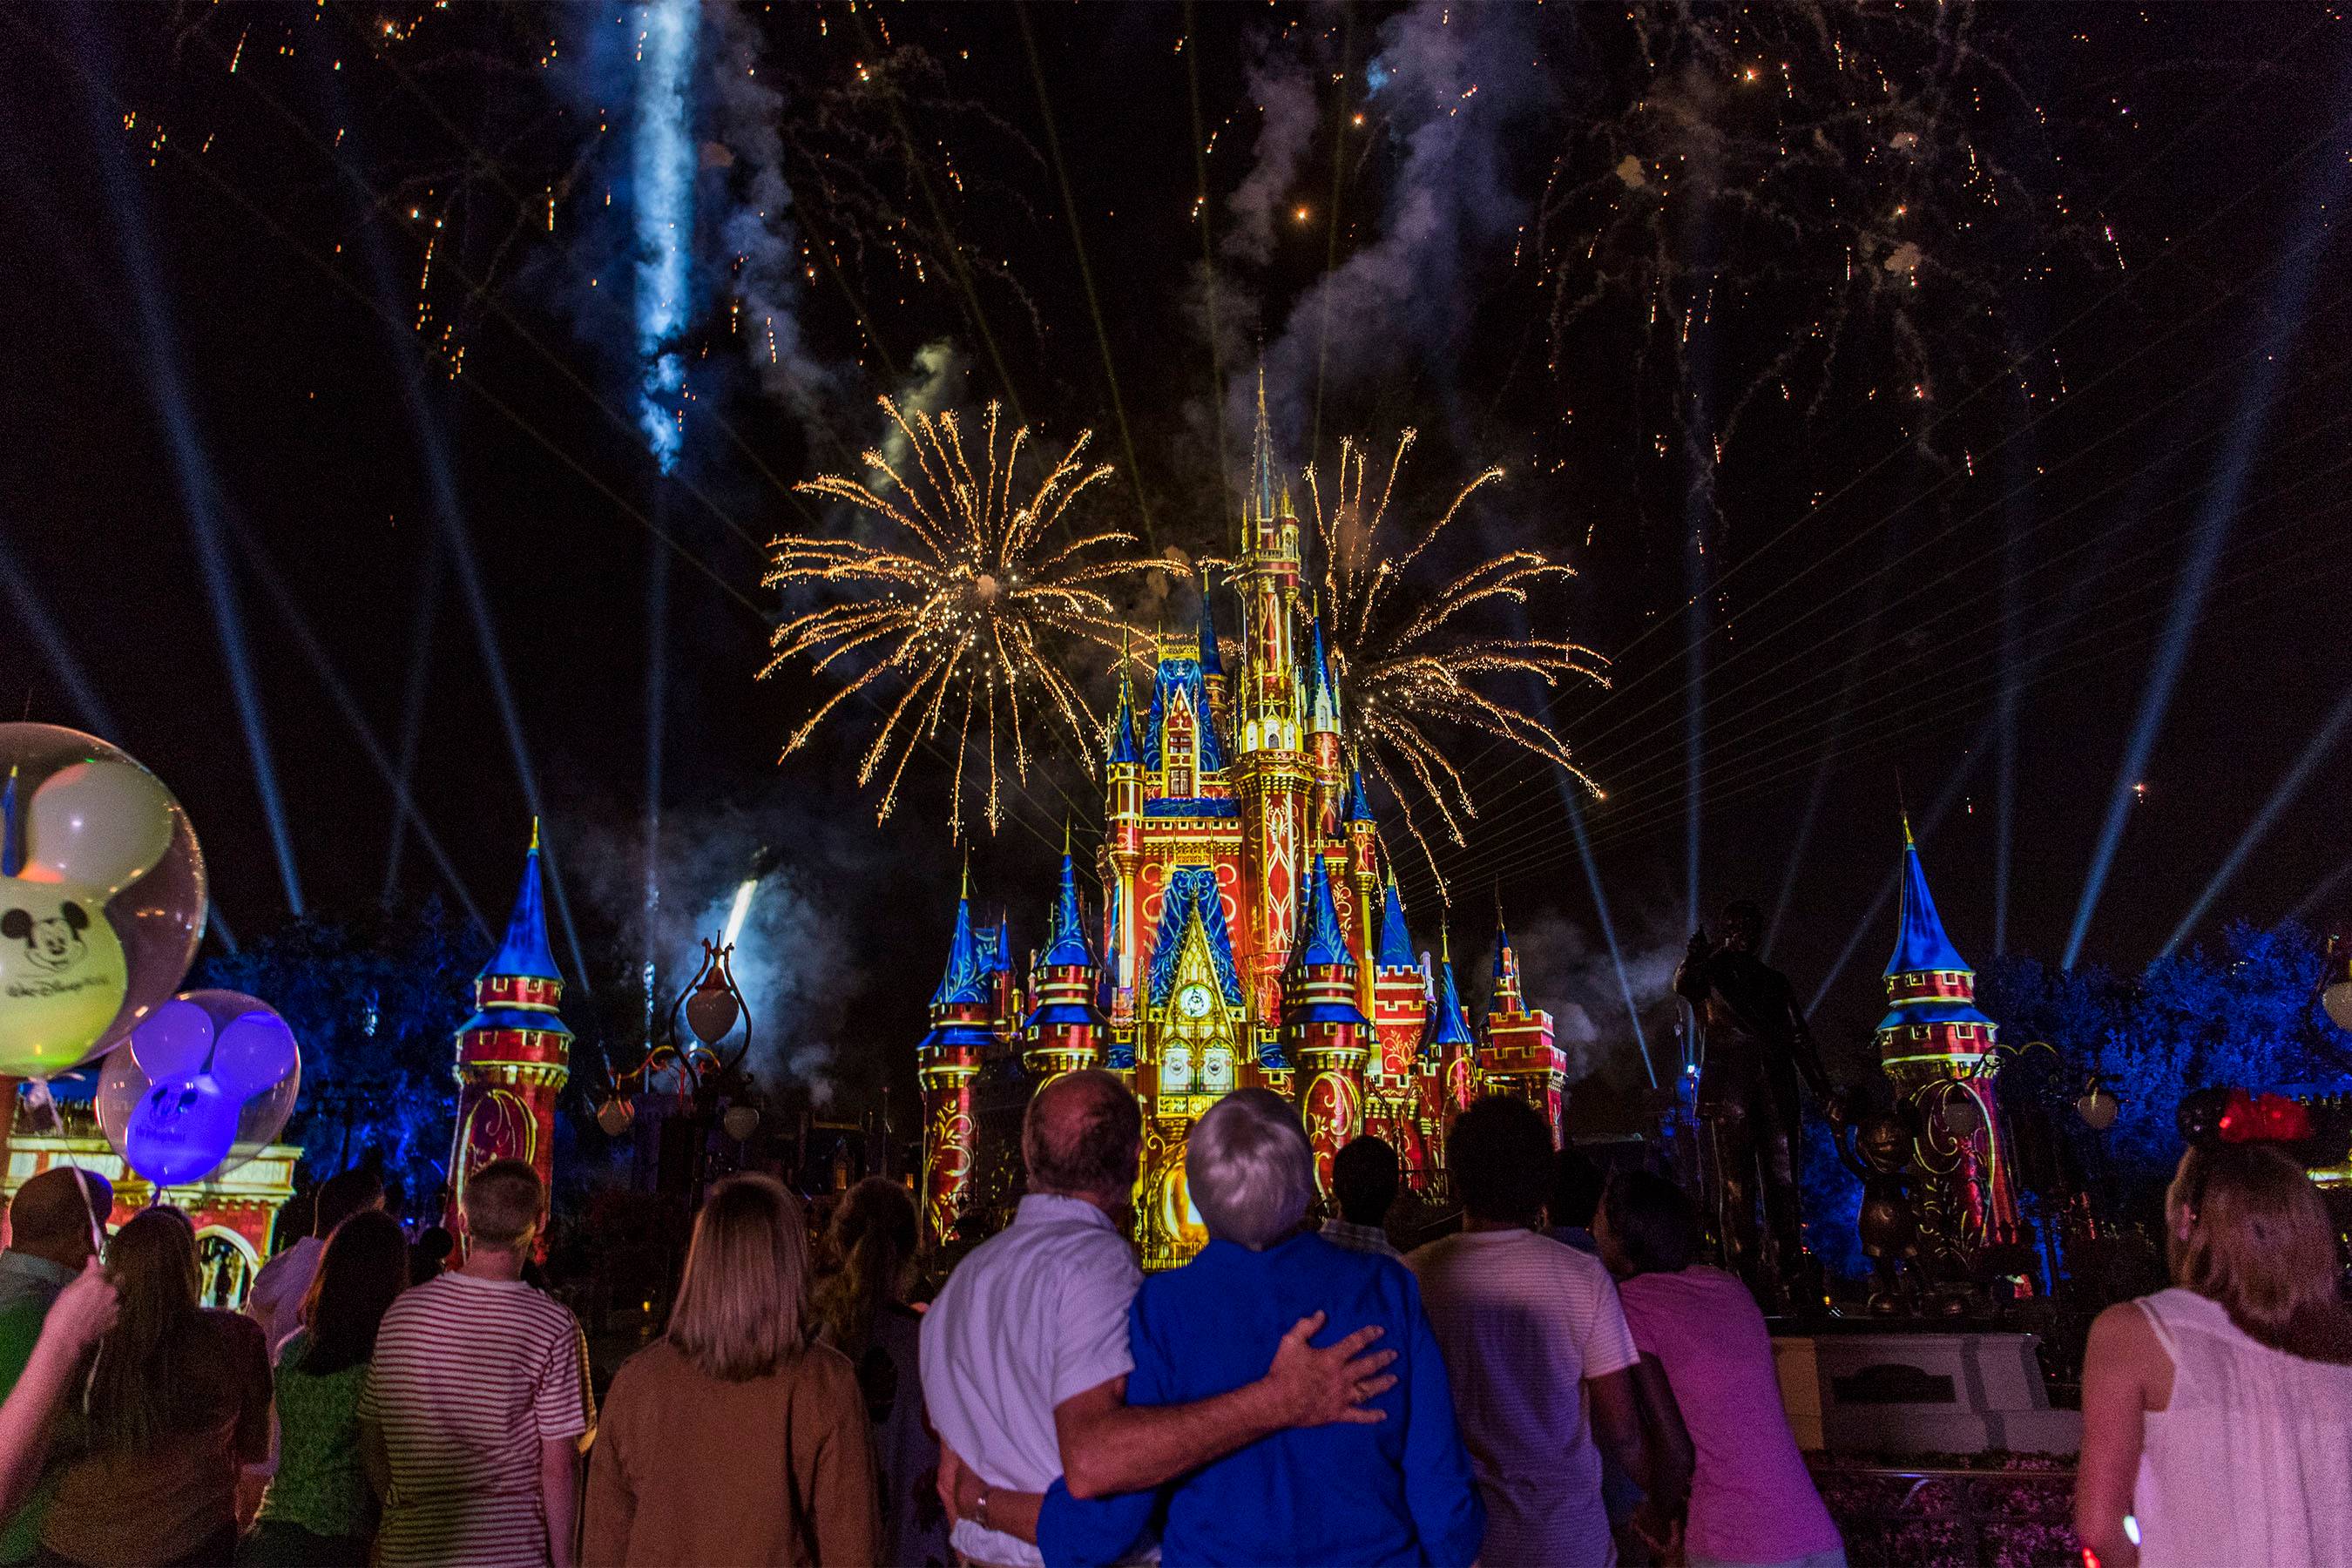 Happily Ever After fireworks show returning to Walt Disney World